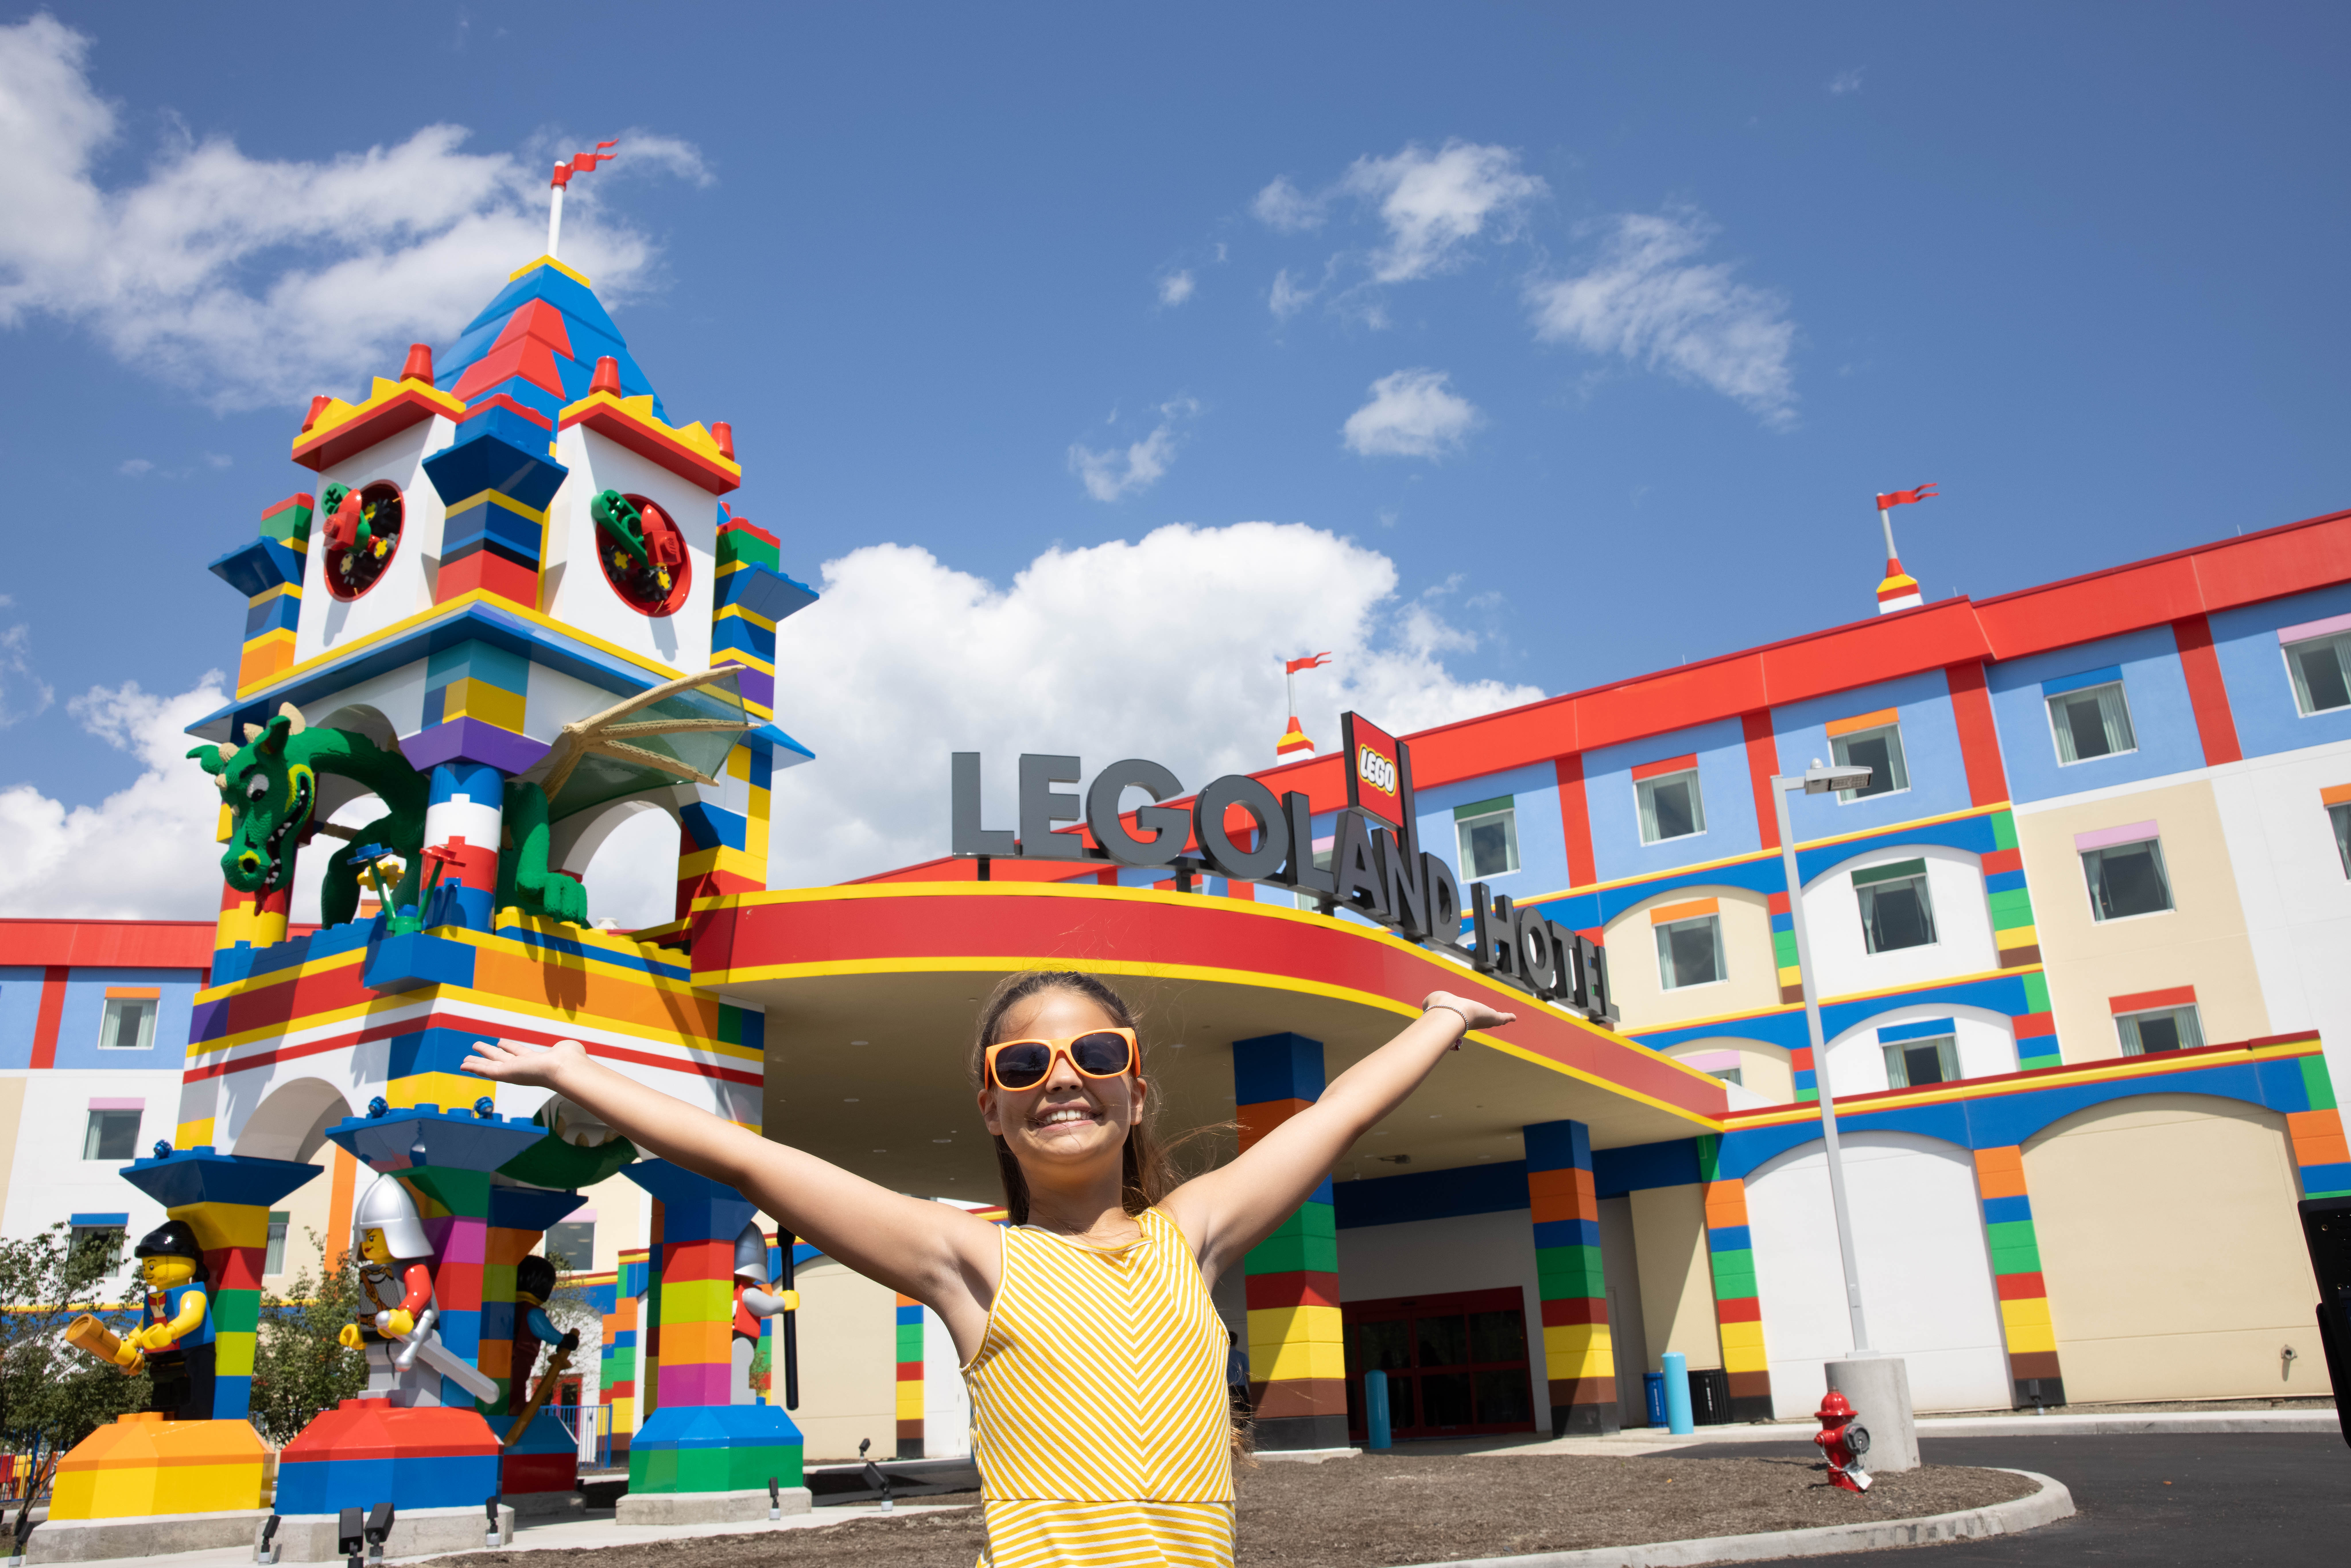 Legoland Hotel, Vacation Planning